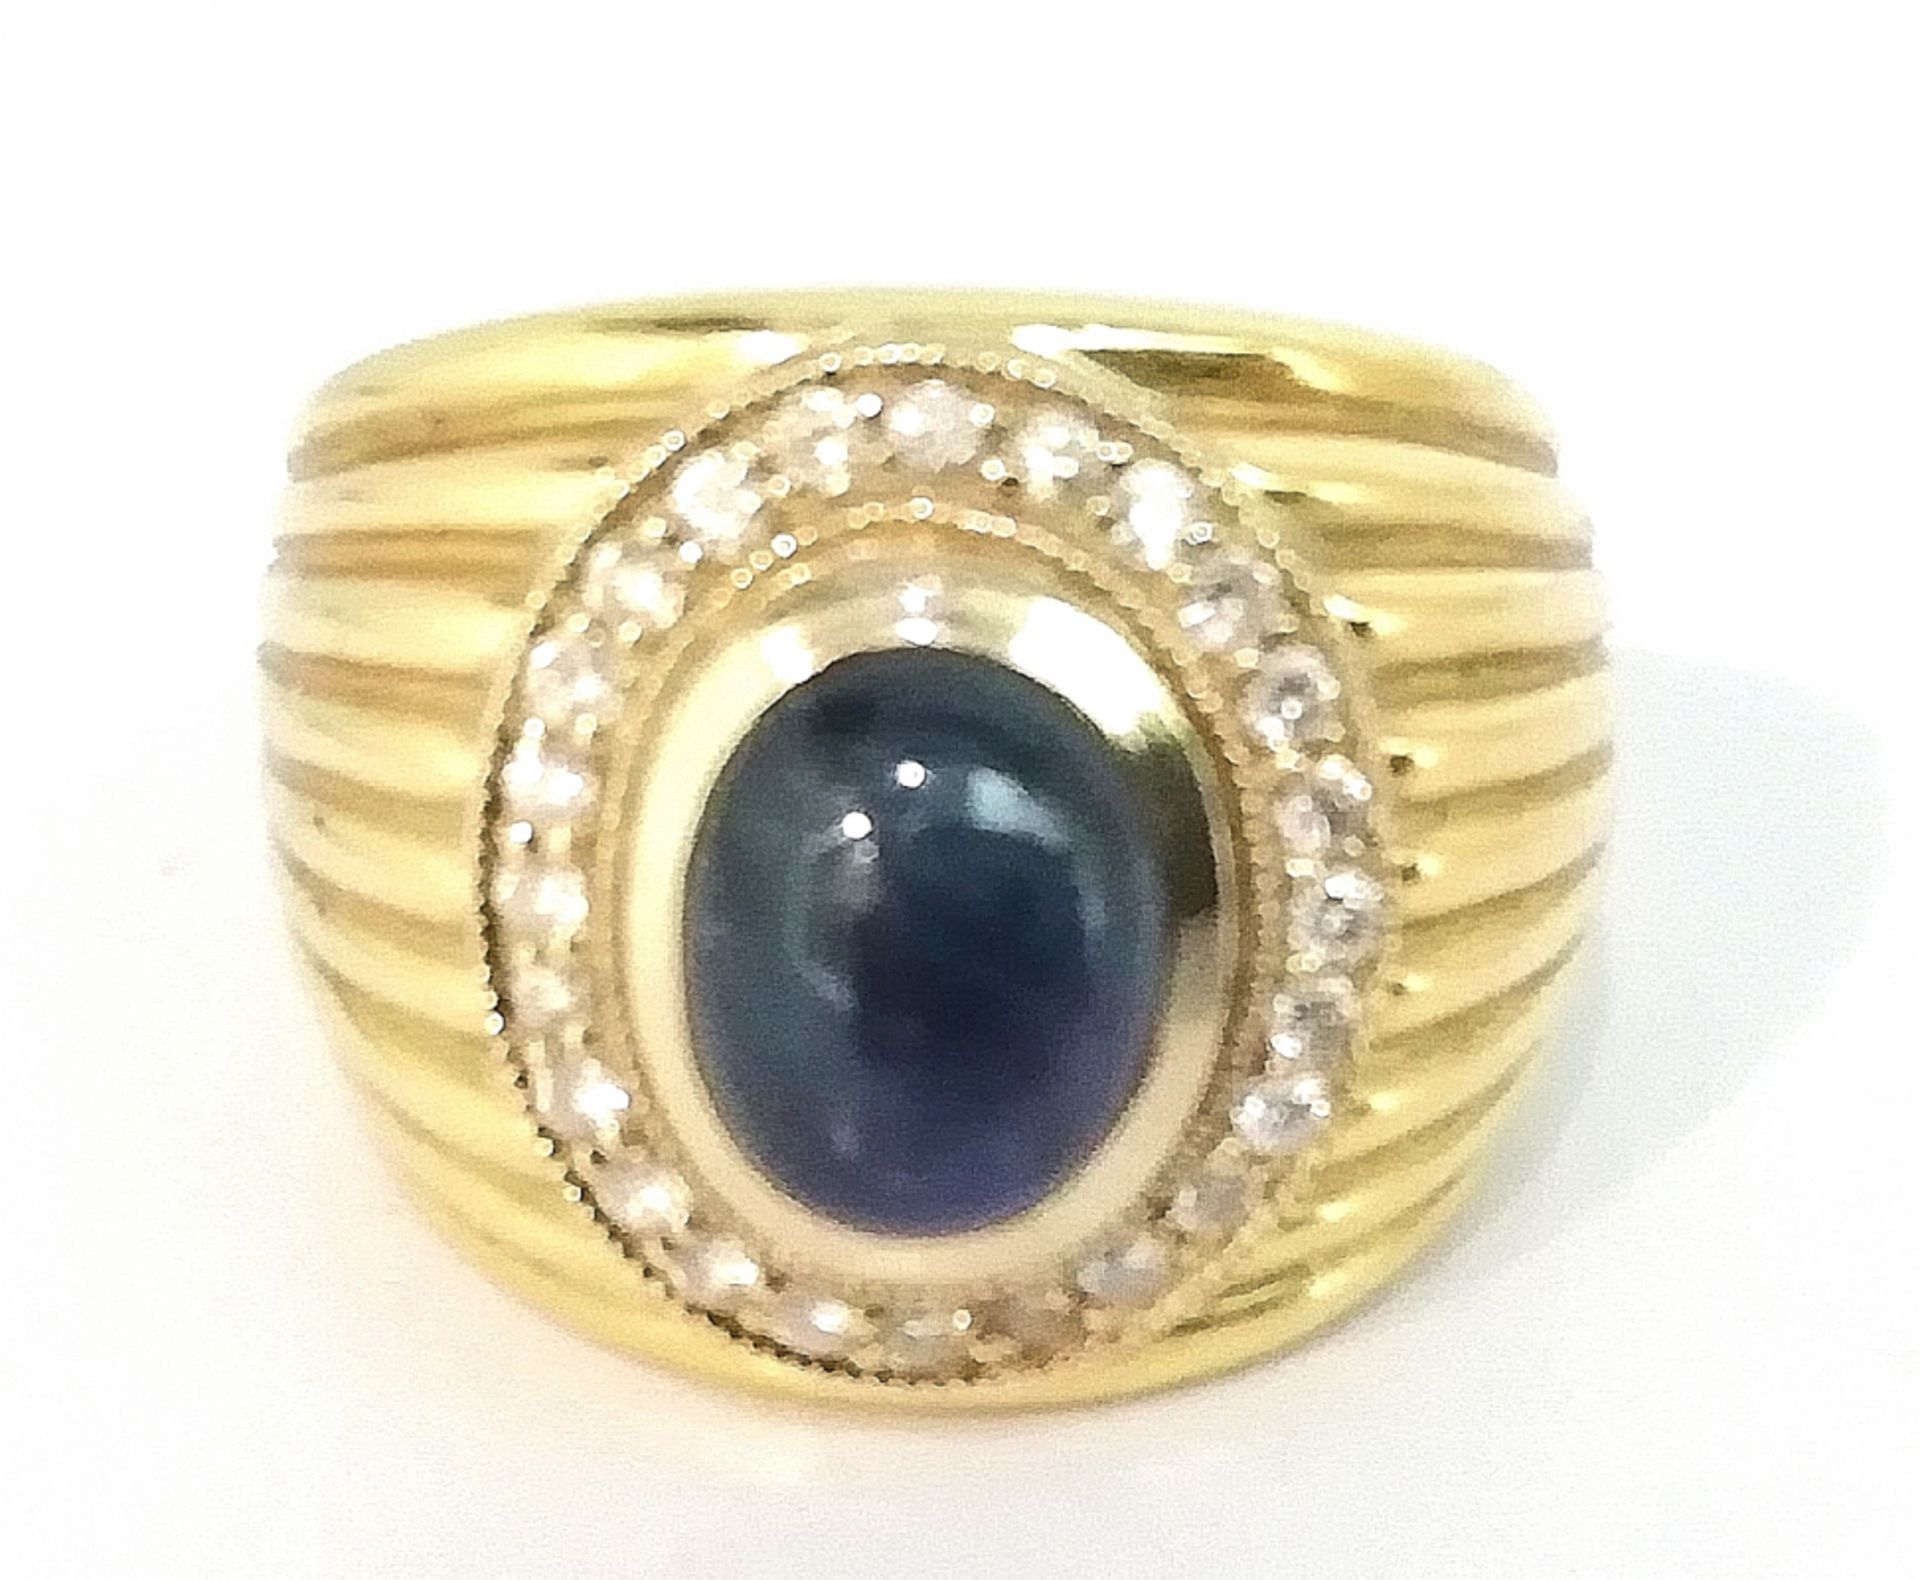 Saphir Brillant Ring